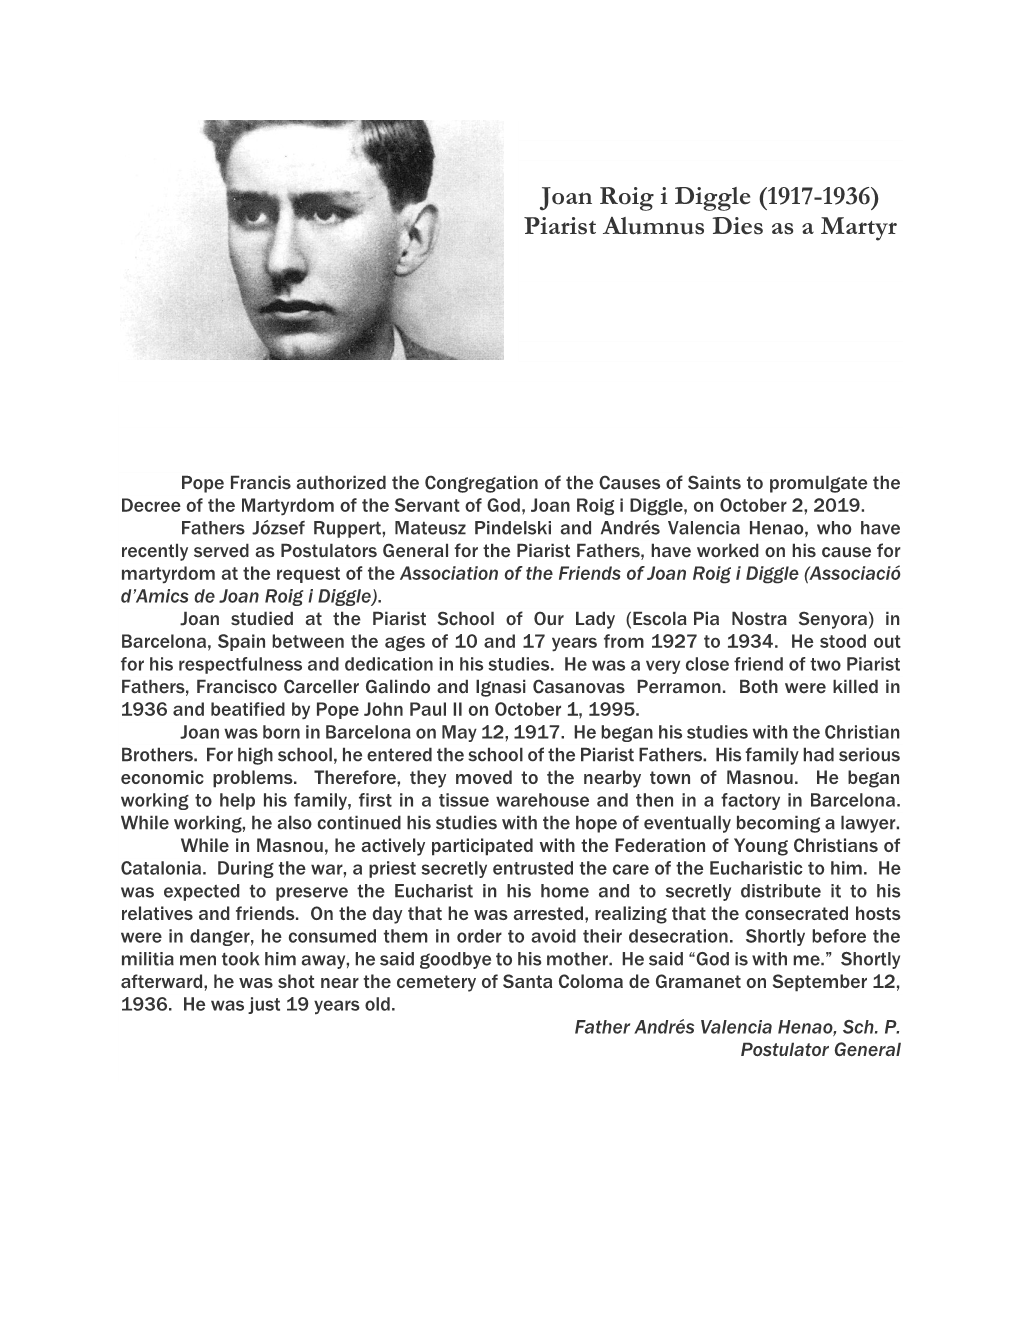 Joan Roig I Diggle (1917-1936) Piarist Alumnus Dies As a Martyr